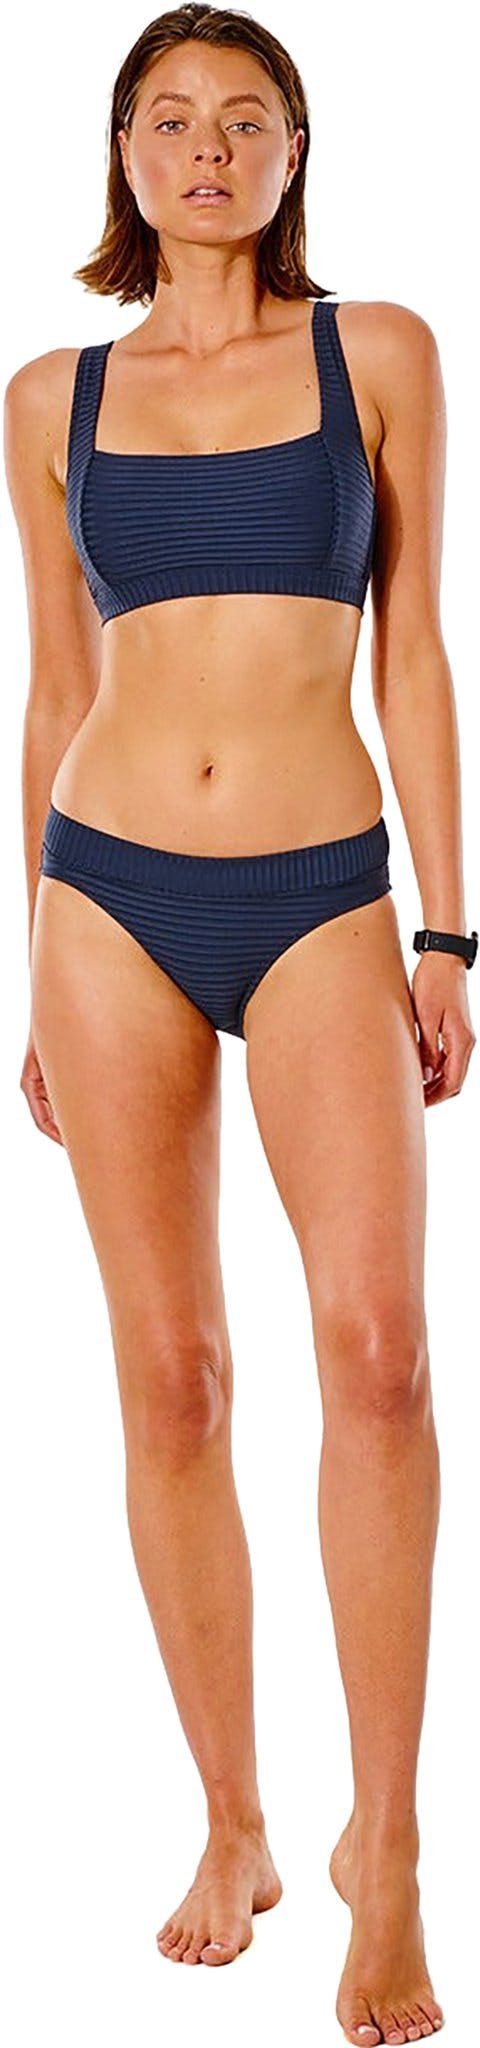 Product gallery image number 5 for product Premium Surf Full Bikini Bottom - Women's